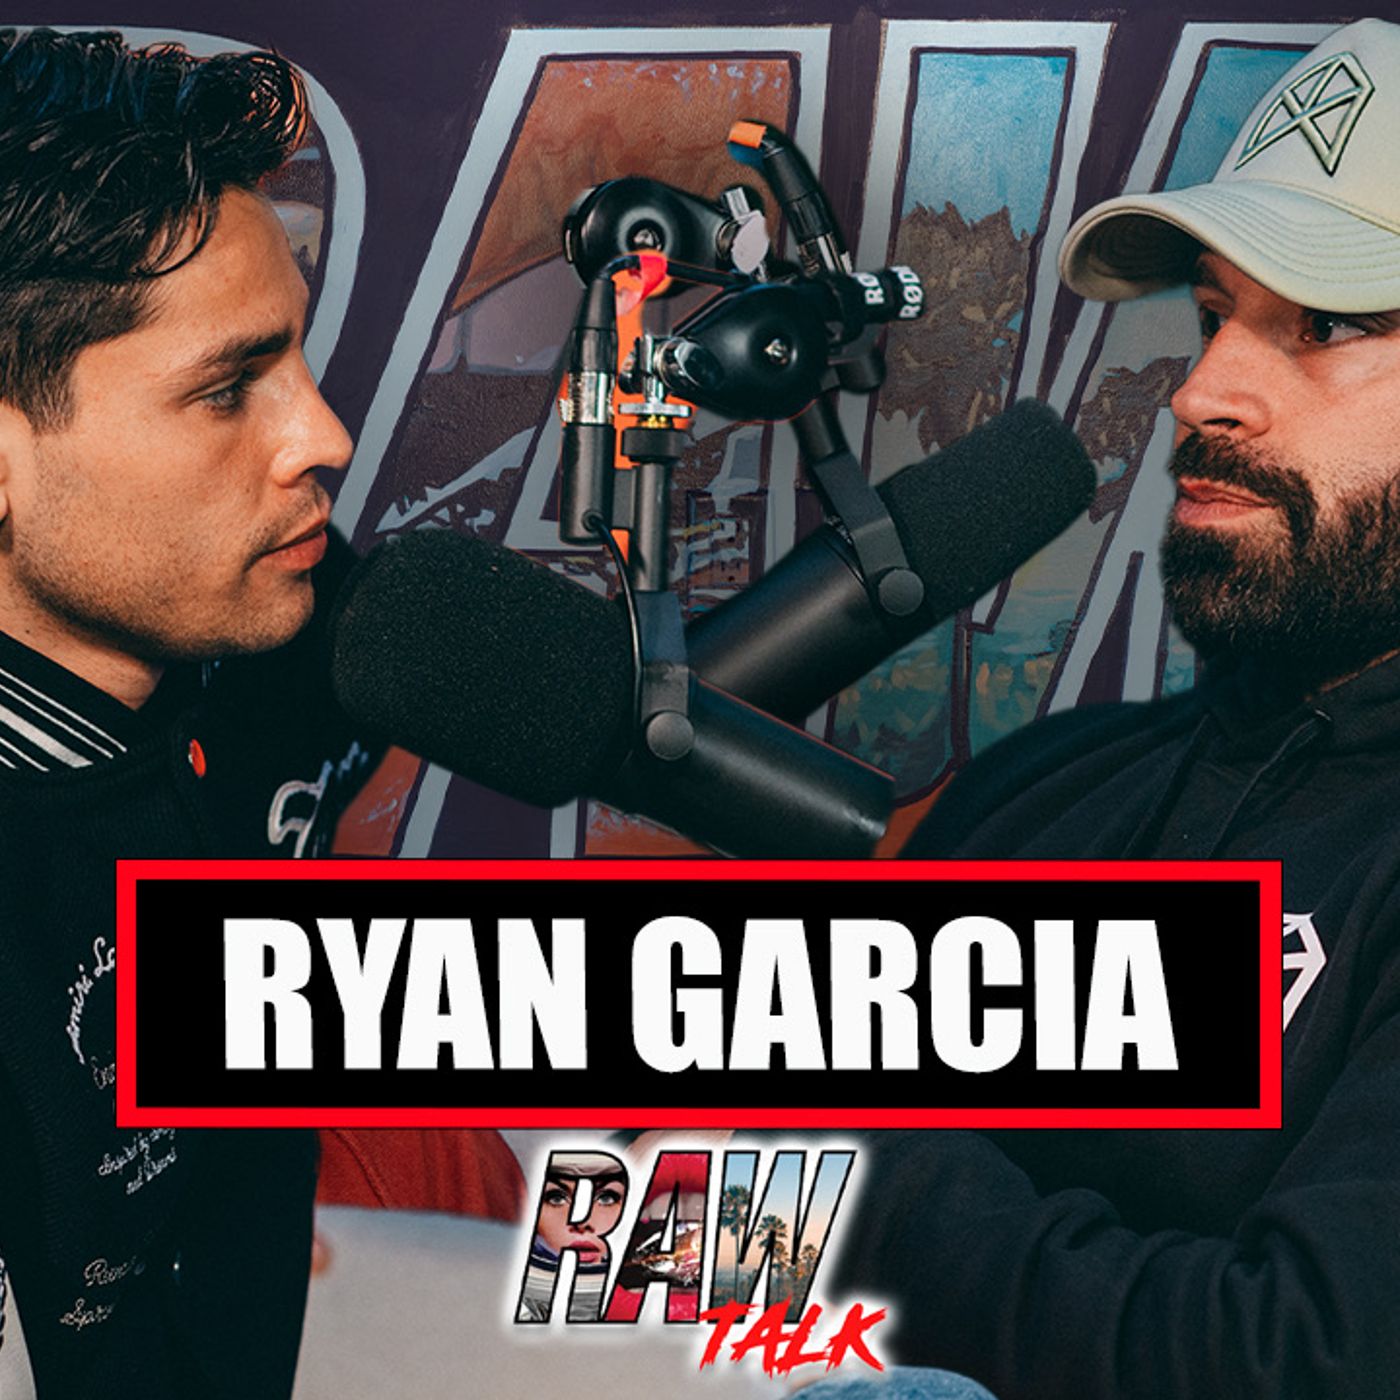 Ryan Garcia on Defending His Undefeated Streak vs Gervonta Davis